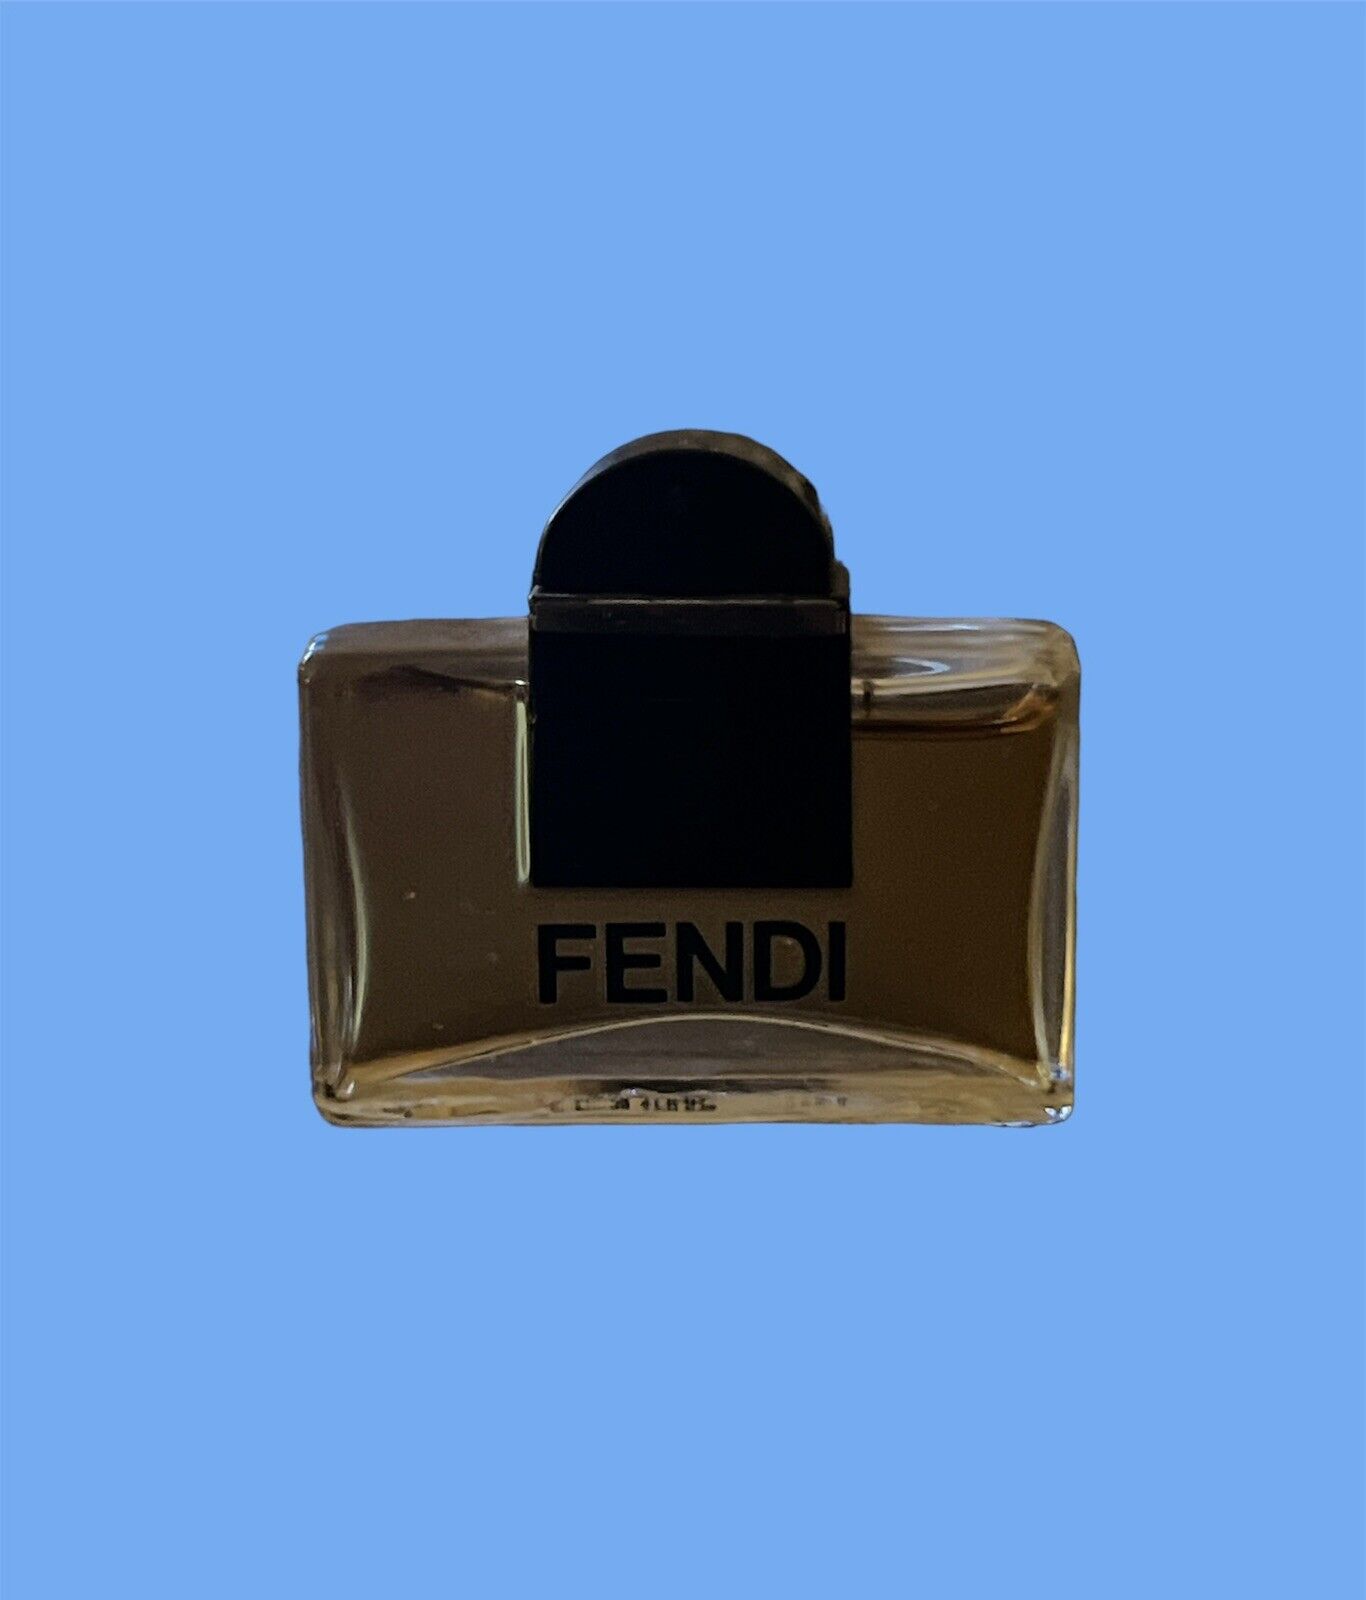 Fendi 4.5 ml Perfume Miniature Eau De Toilette - Full